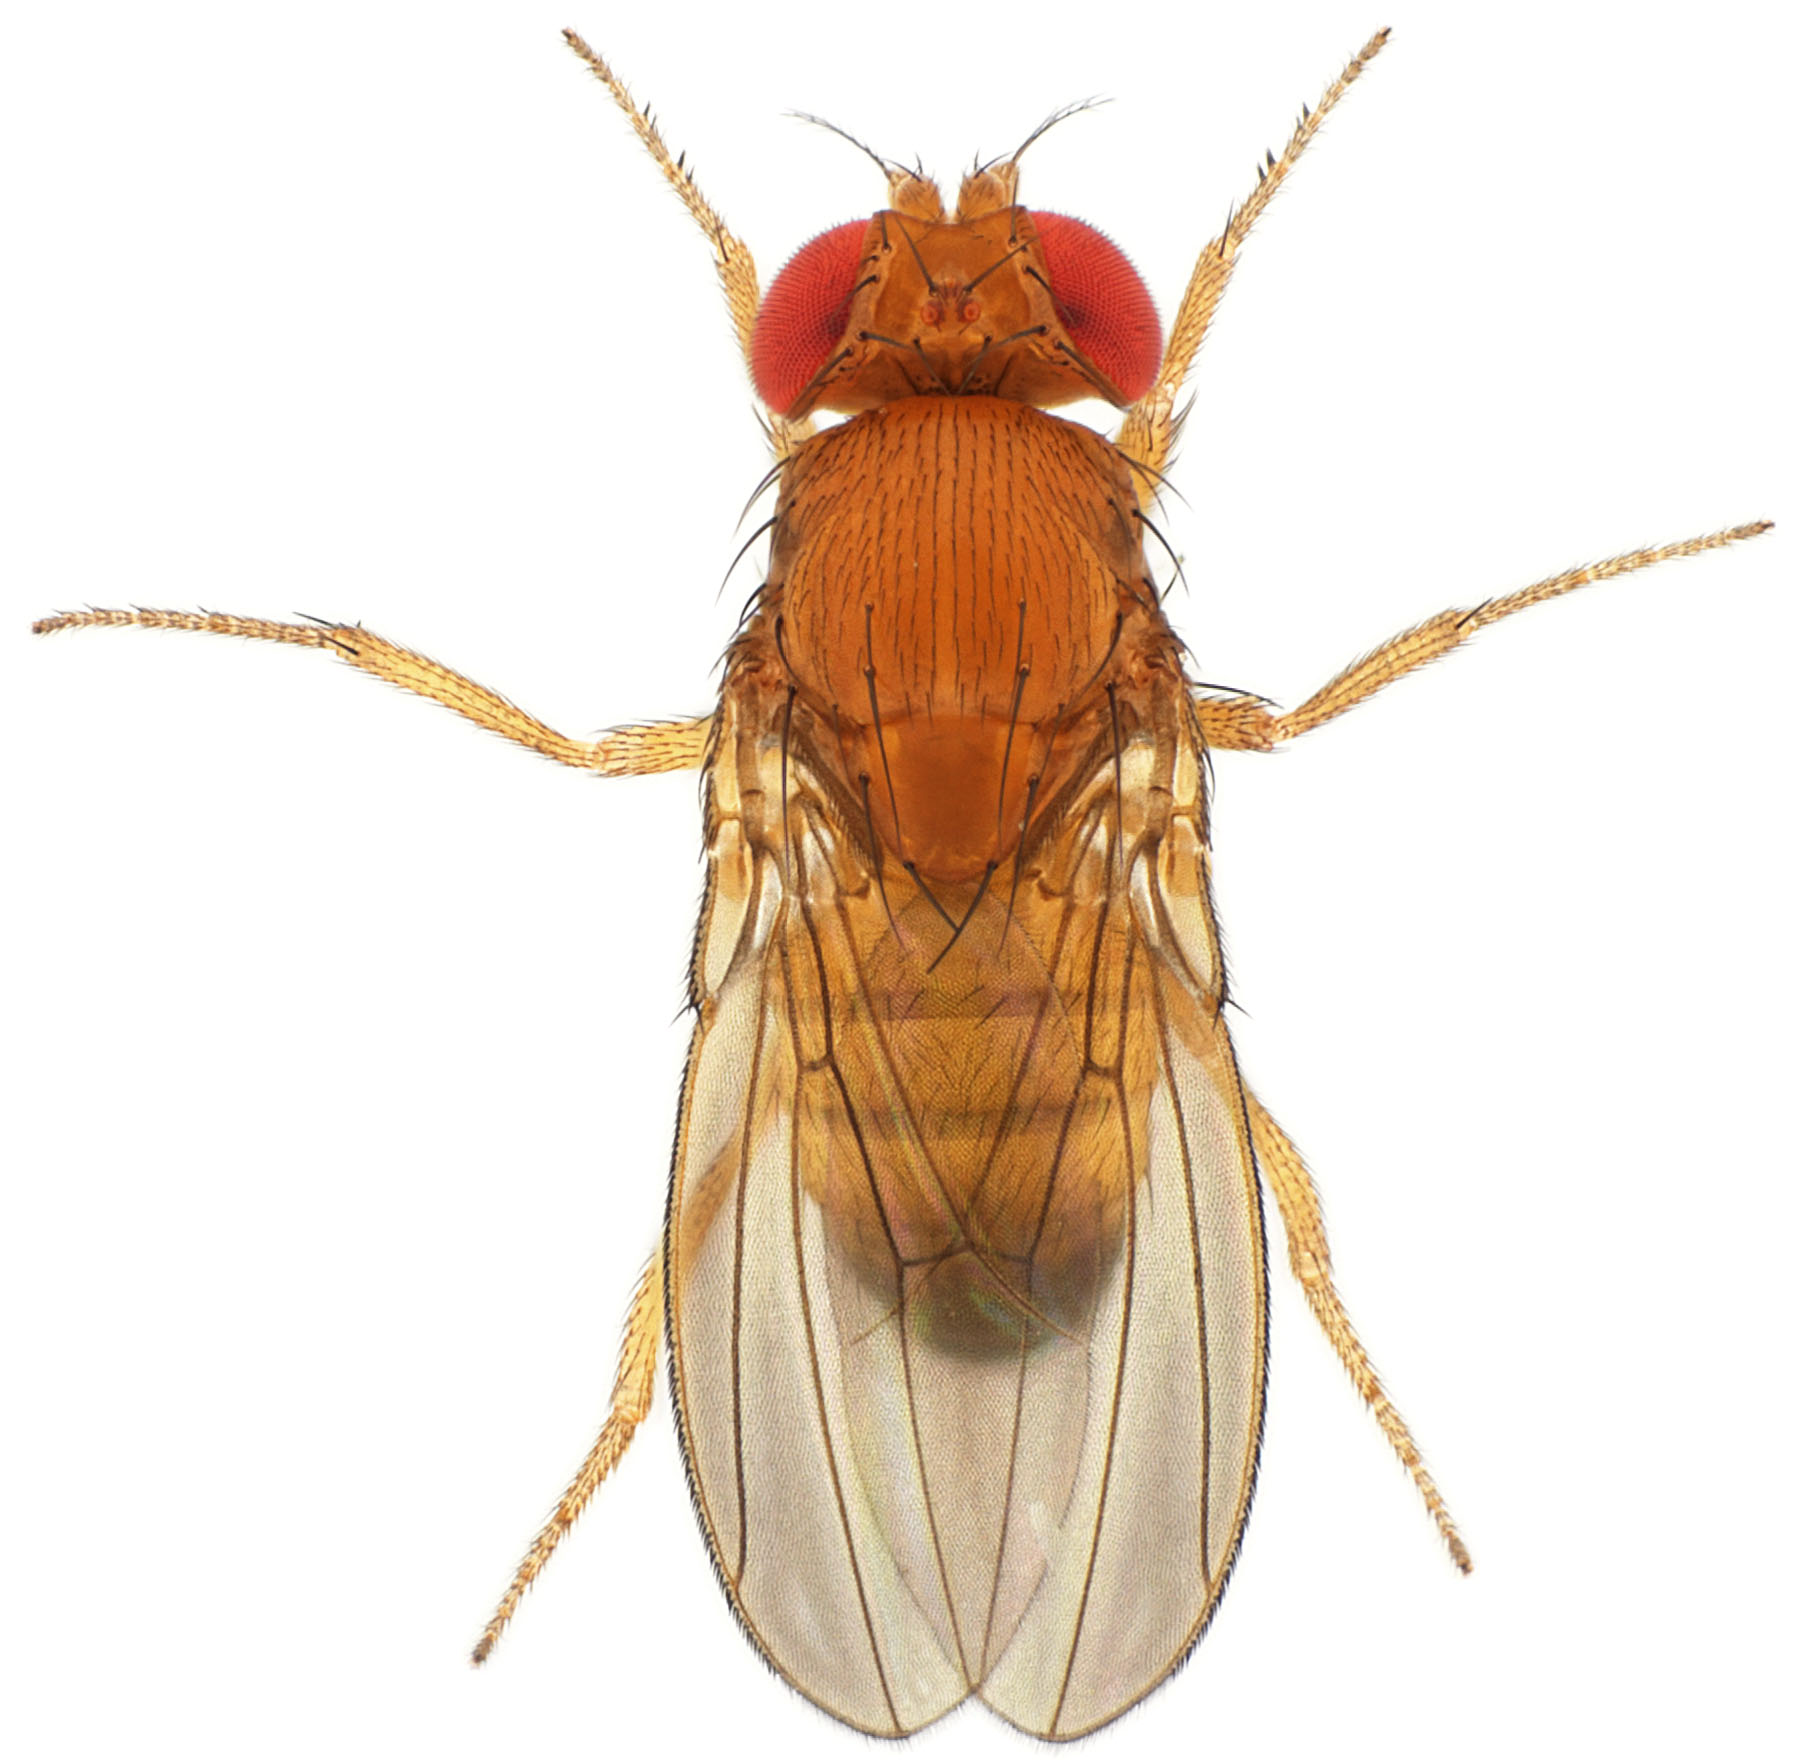 Drosophila lutescens male 1x12,5 dorsal-enhanced